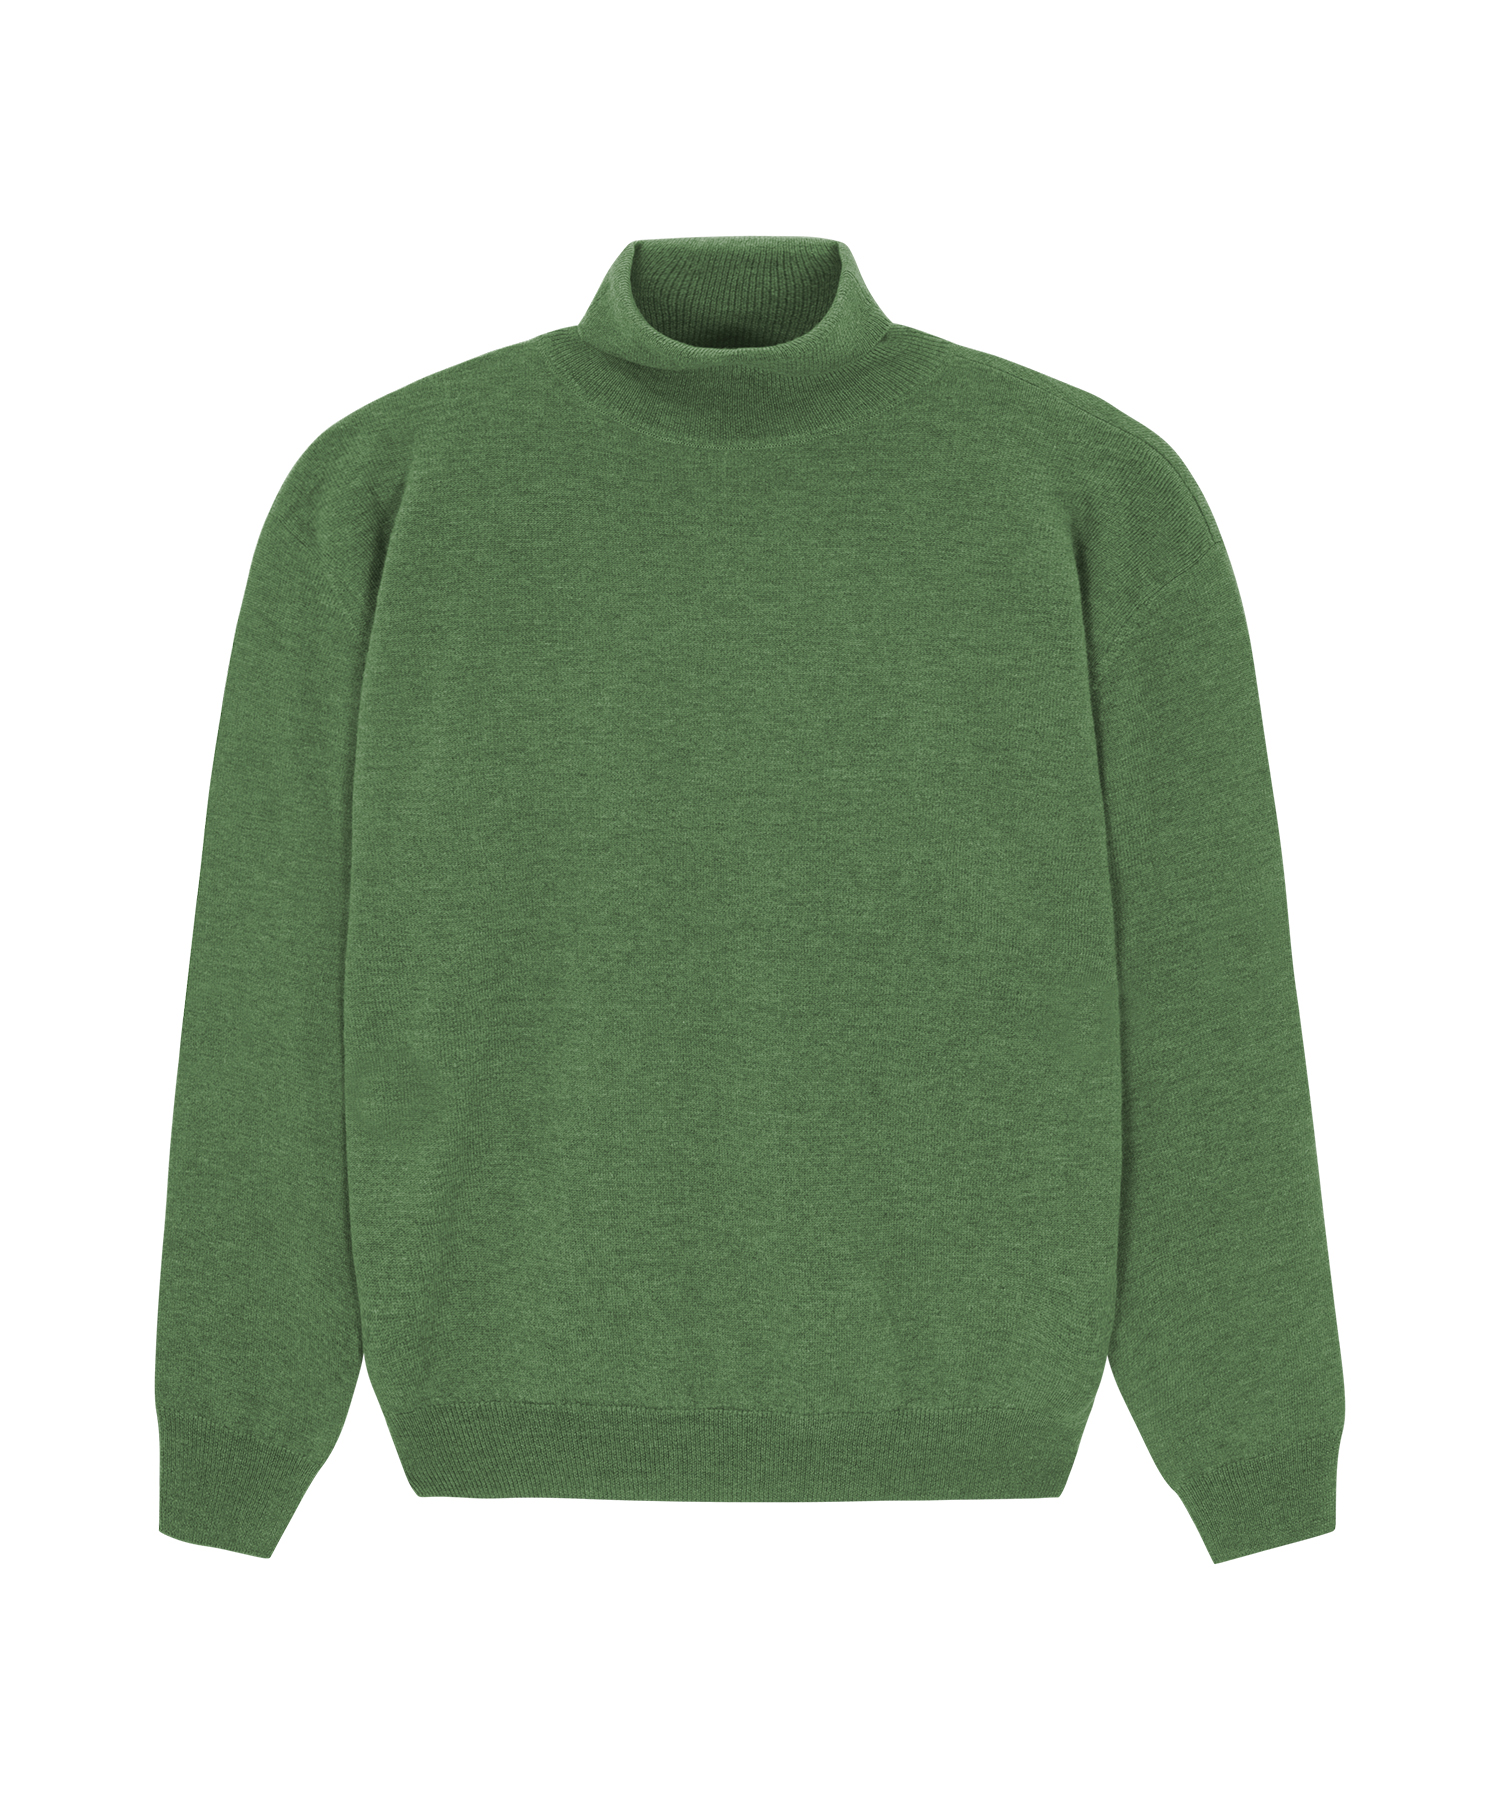 Superfine Merino Wool Turtleneck - Green